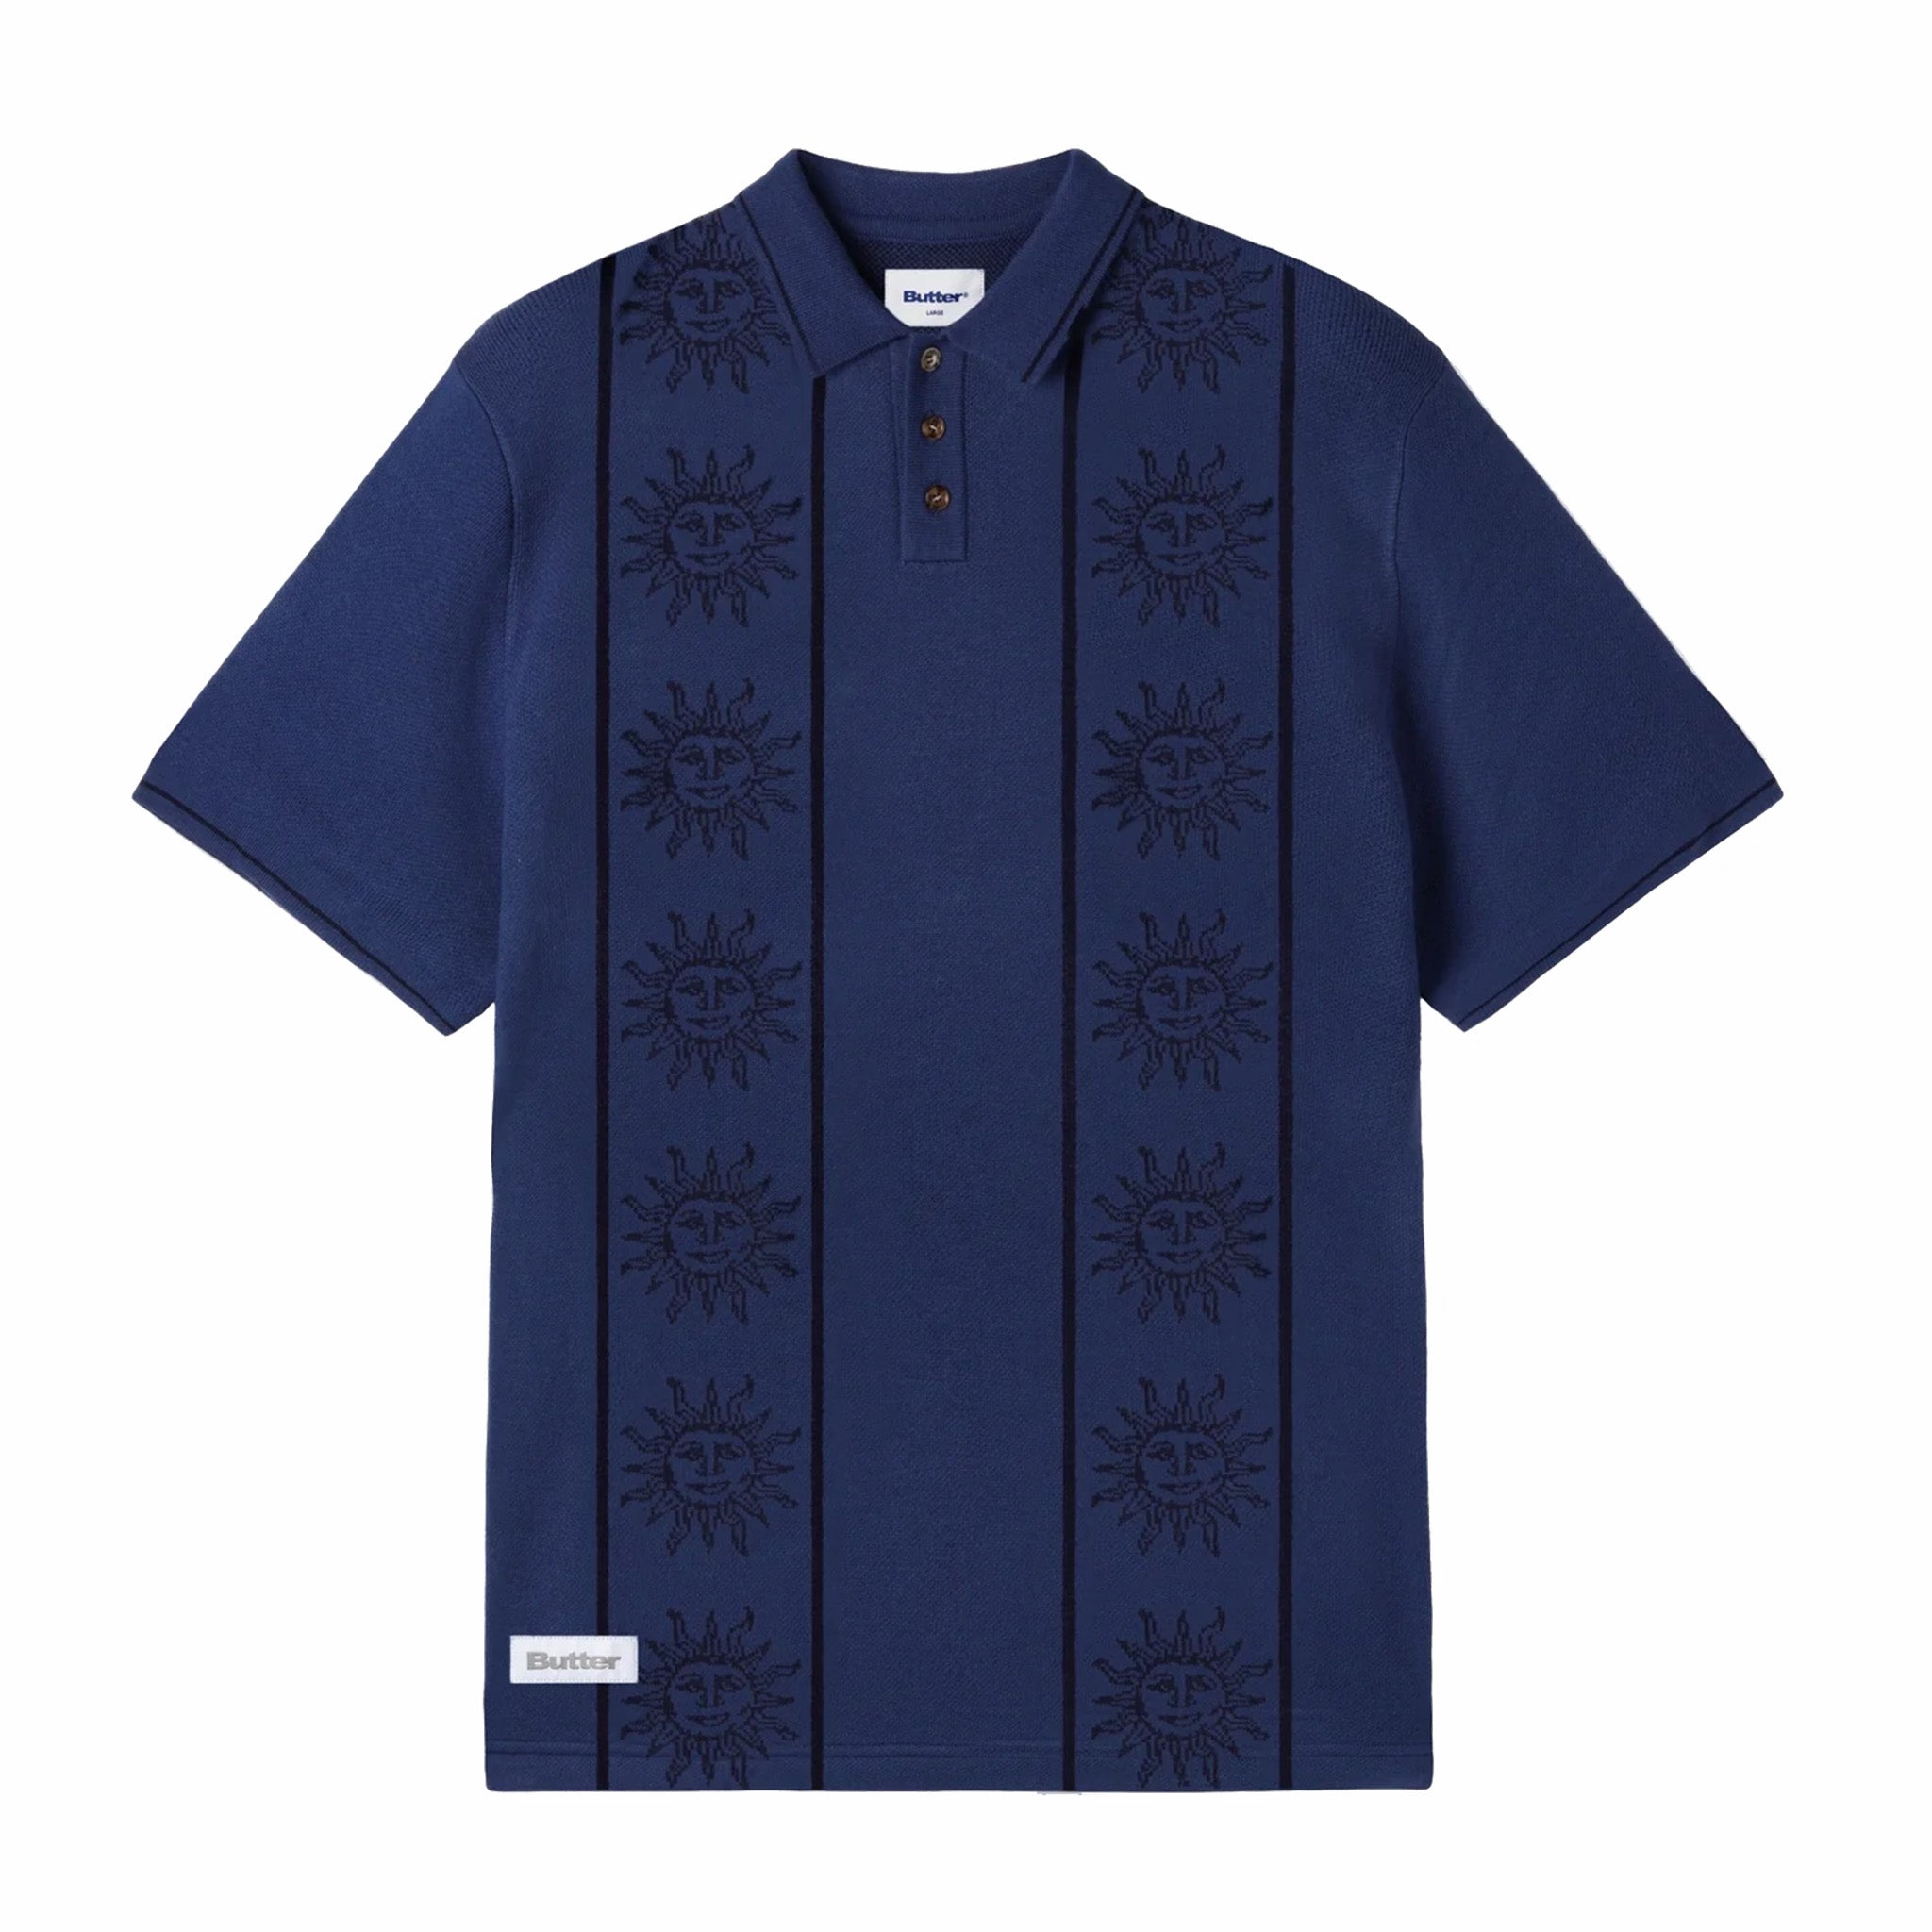 Butter Goods Solar Knit S/S Shirt (Harbour Blue) - August Shop